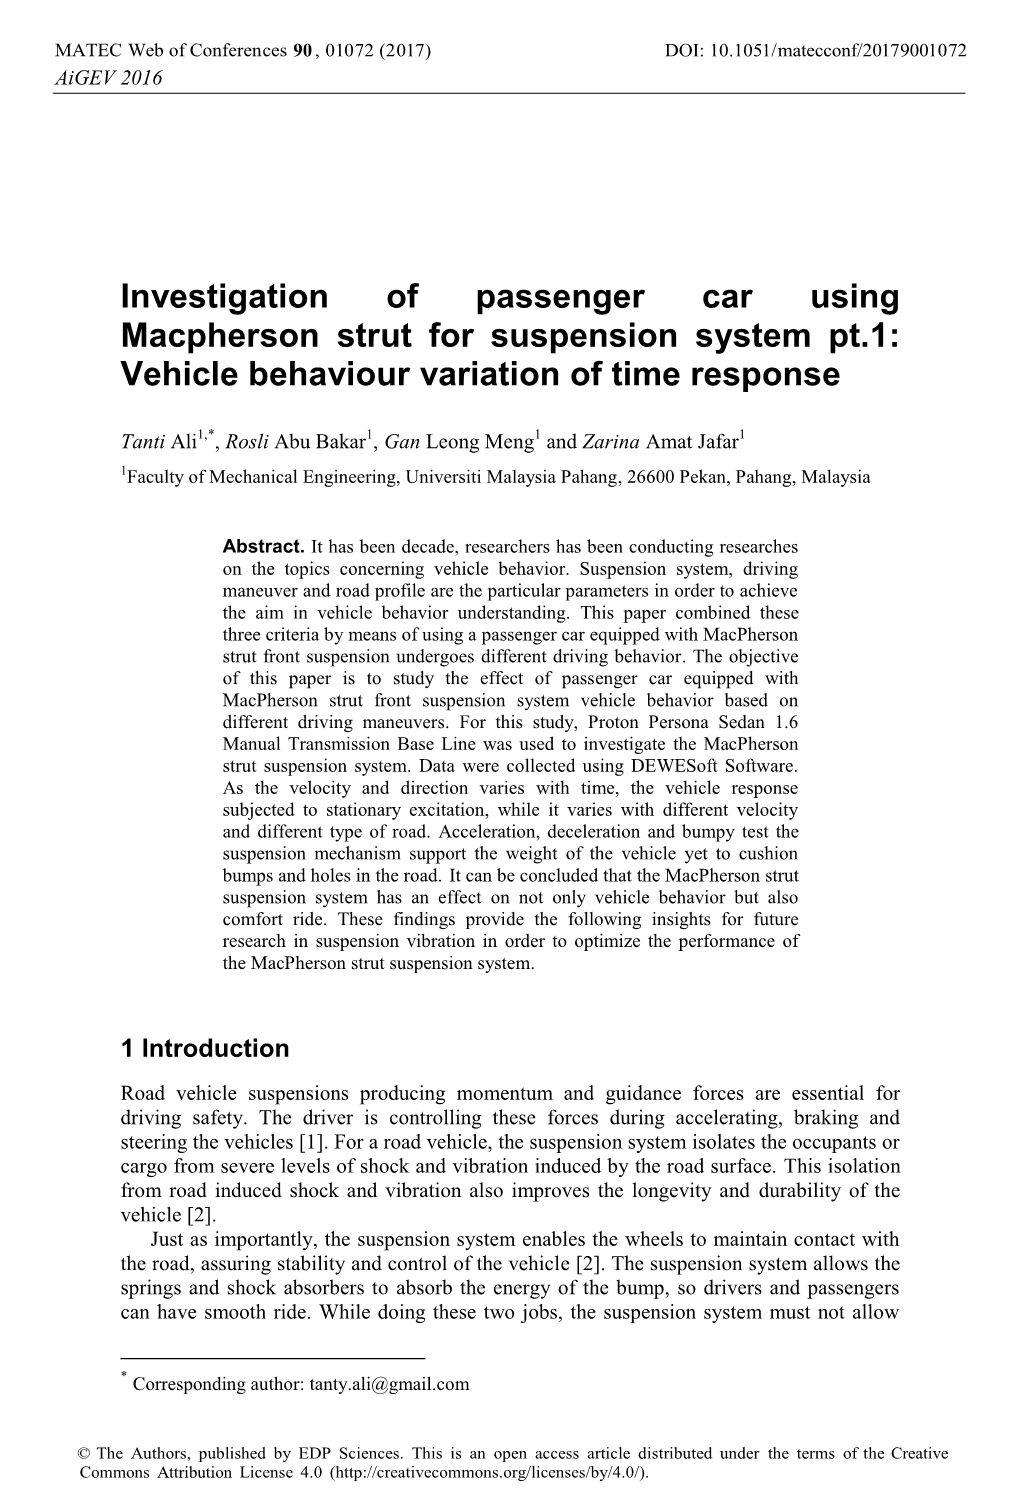 Investigation of Passenger Car Using Macpherson Strut for Suspension System Pt.1: Vehicle Behaviour Variation of Time Response